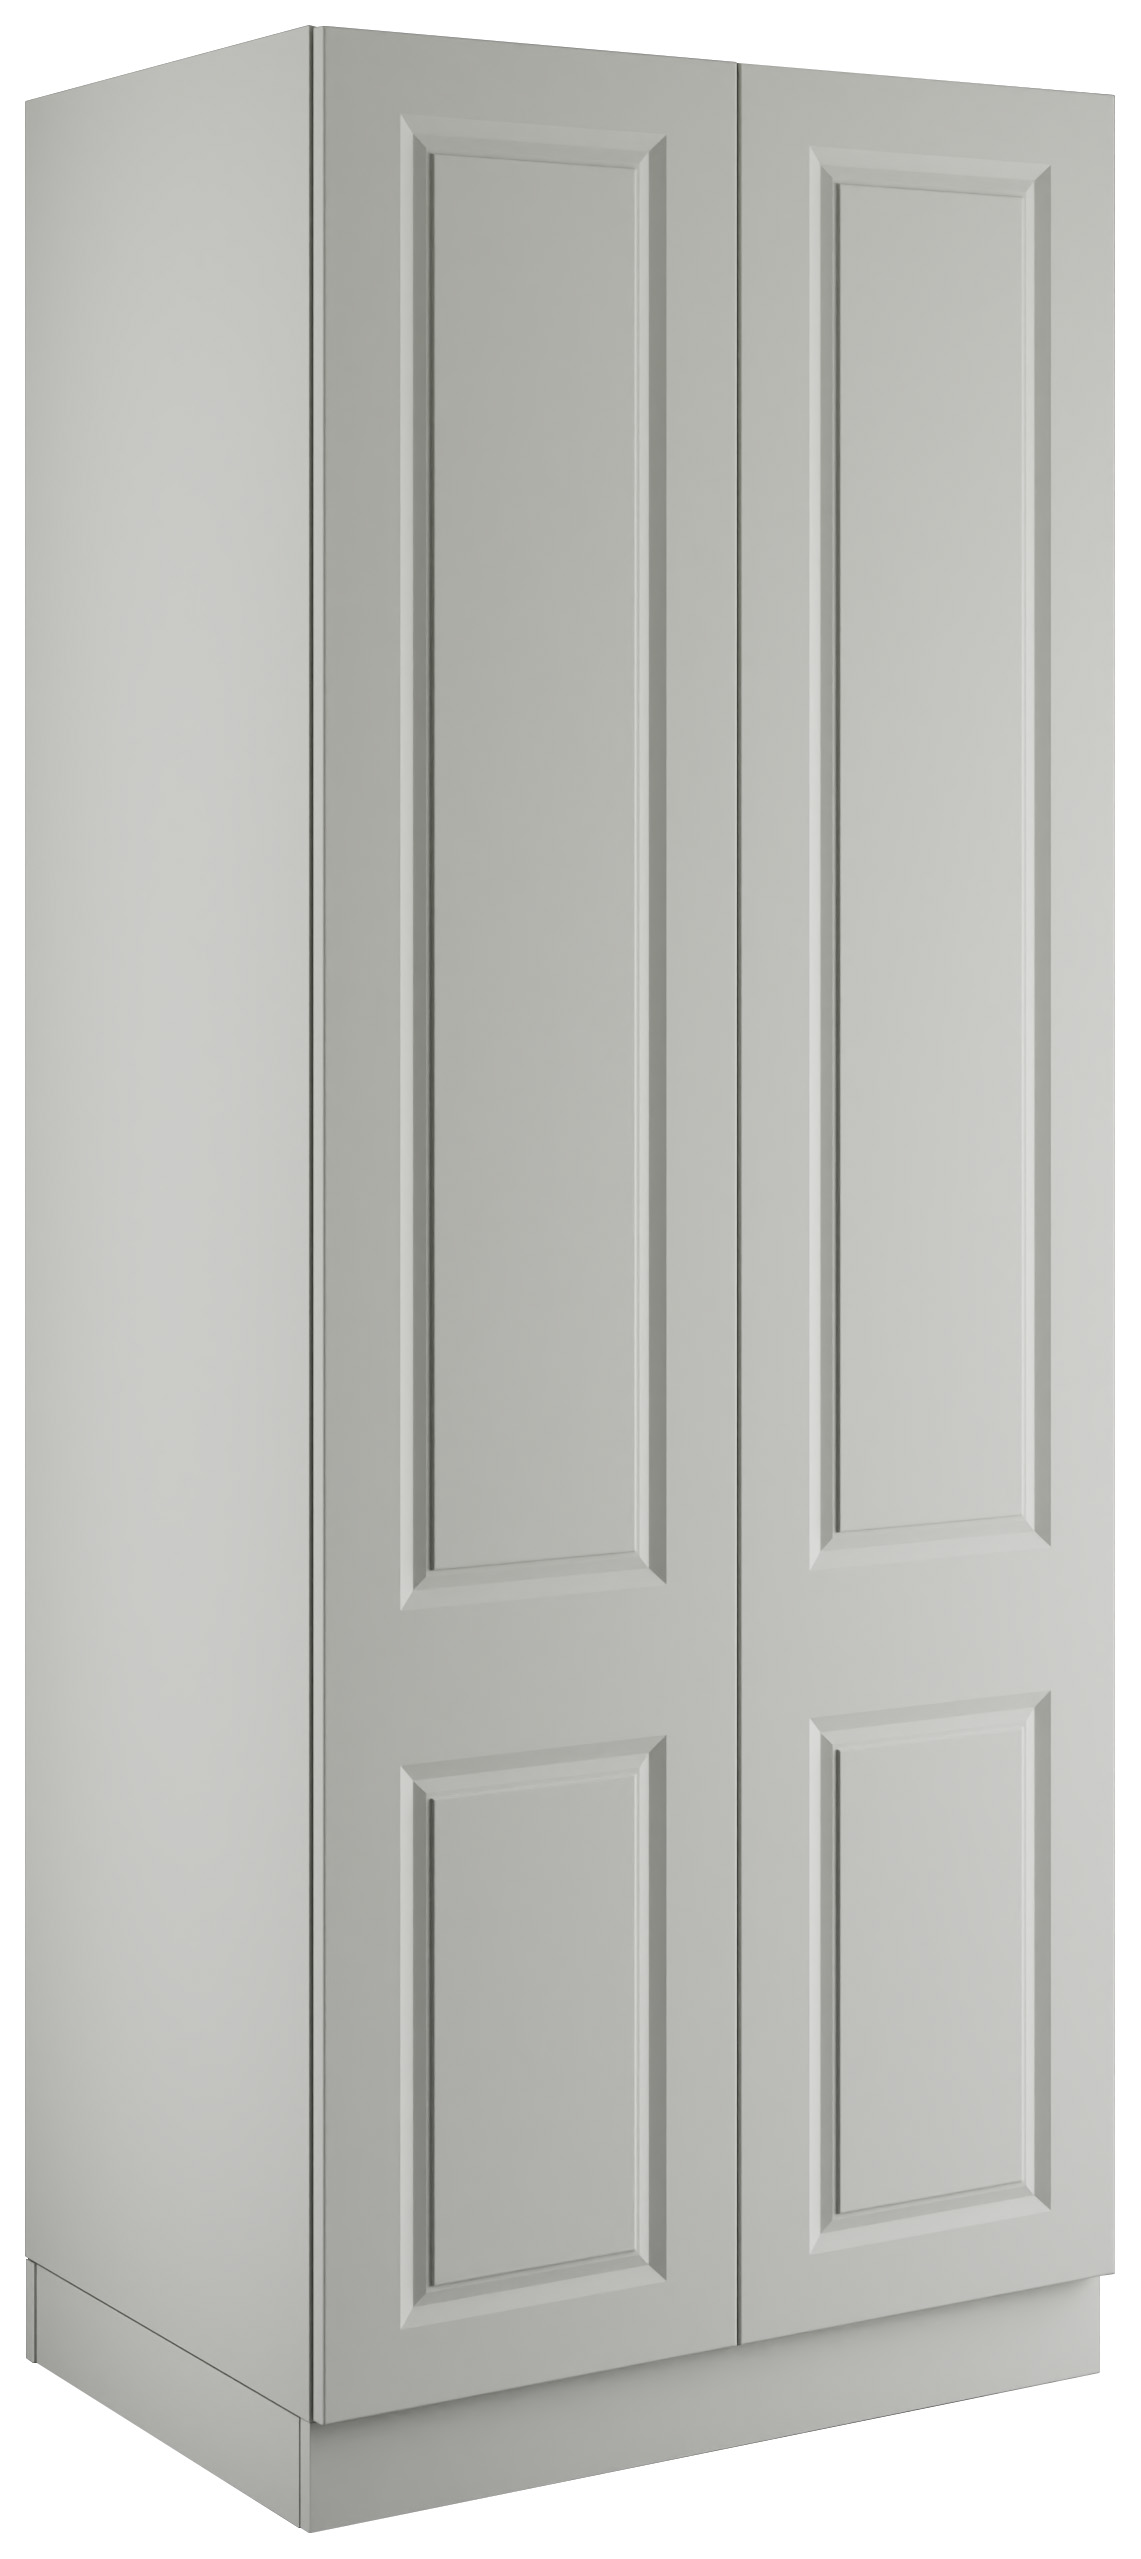 Harrogate Light Grey Double Wardrobe with Shelves - 900 x 2260 x 608mm